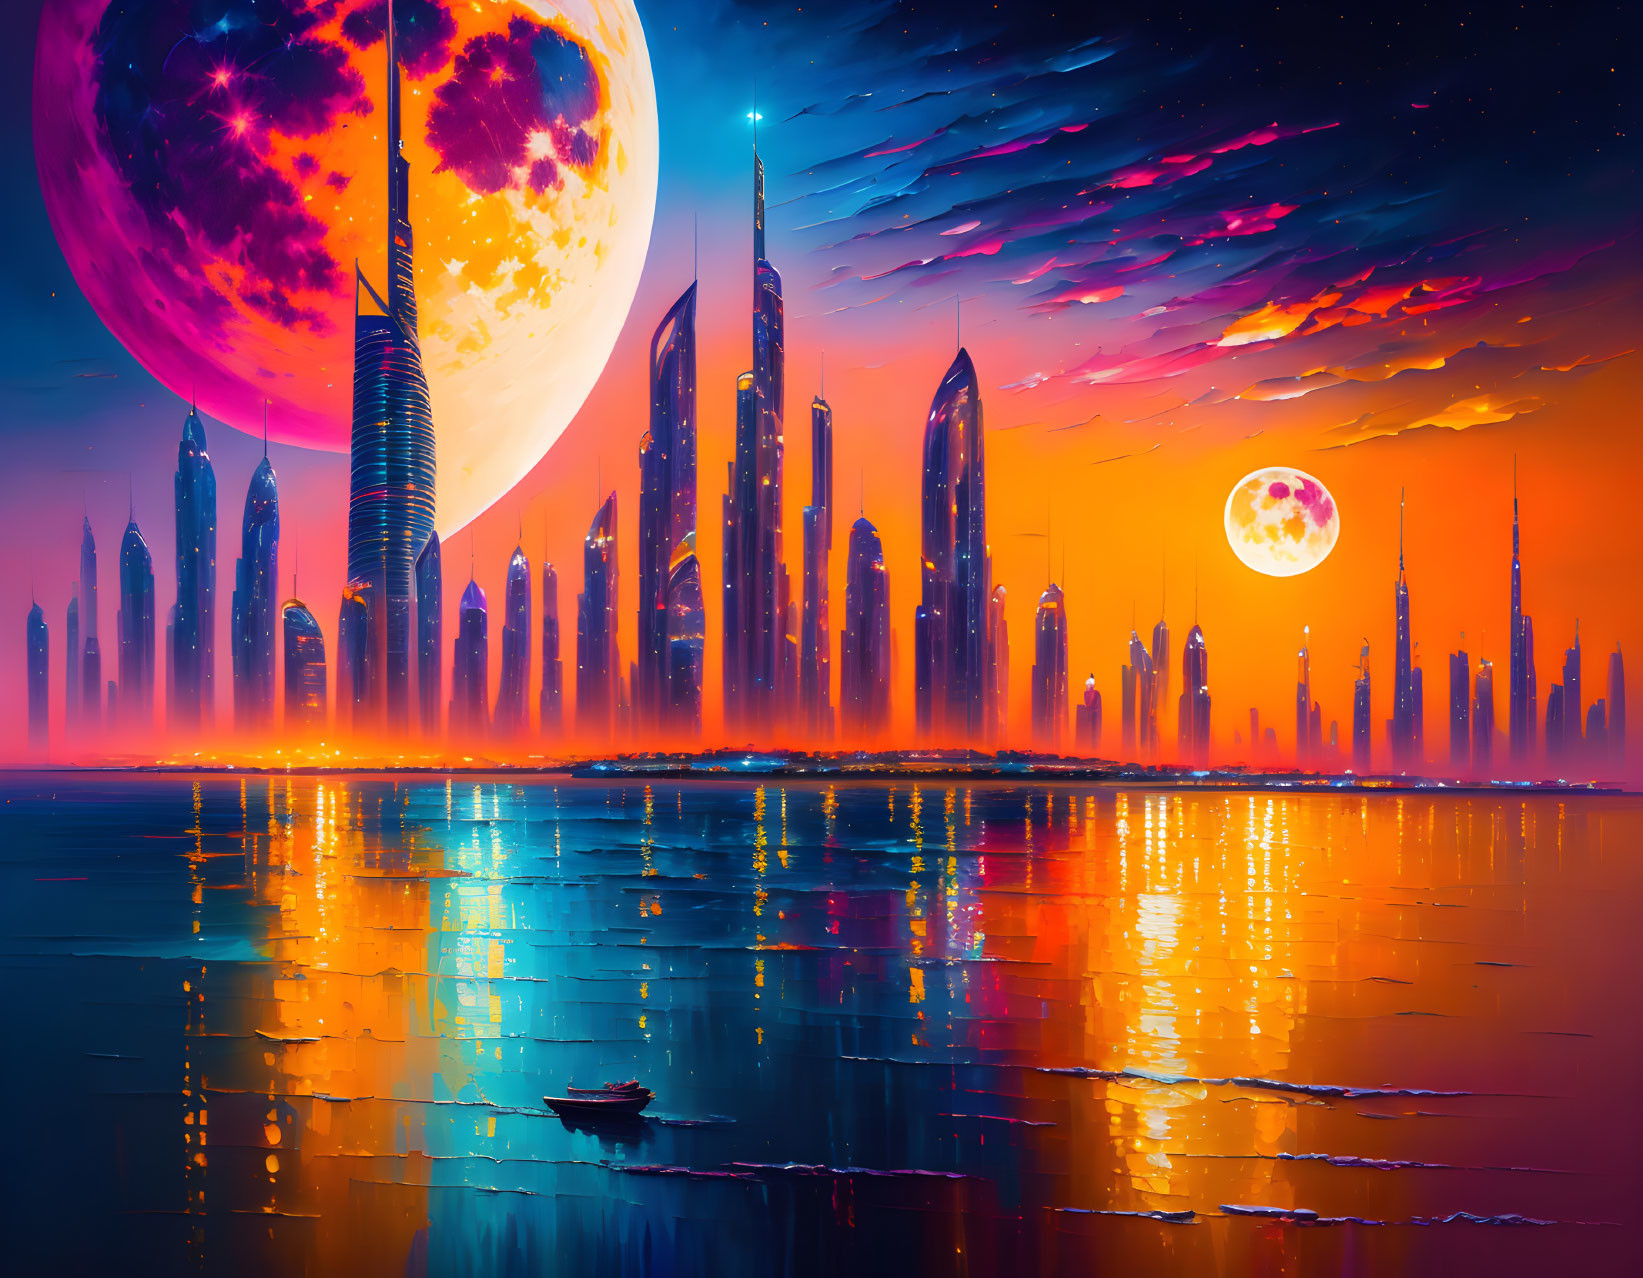 Futuristic sci-fi cityscape with dual moons and colorful nebula